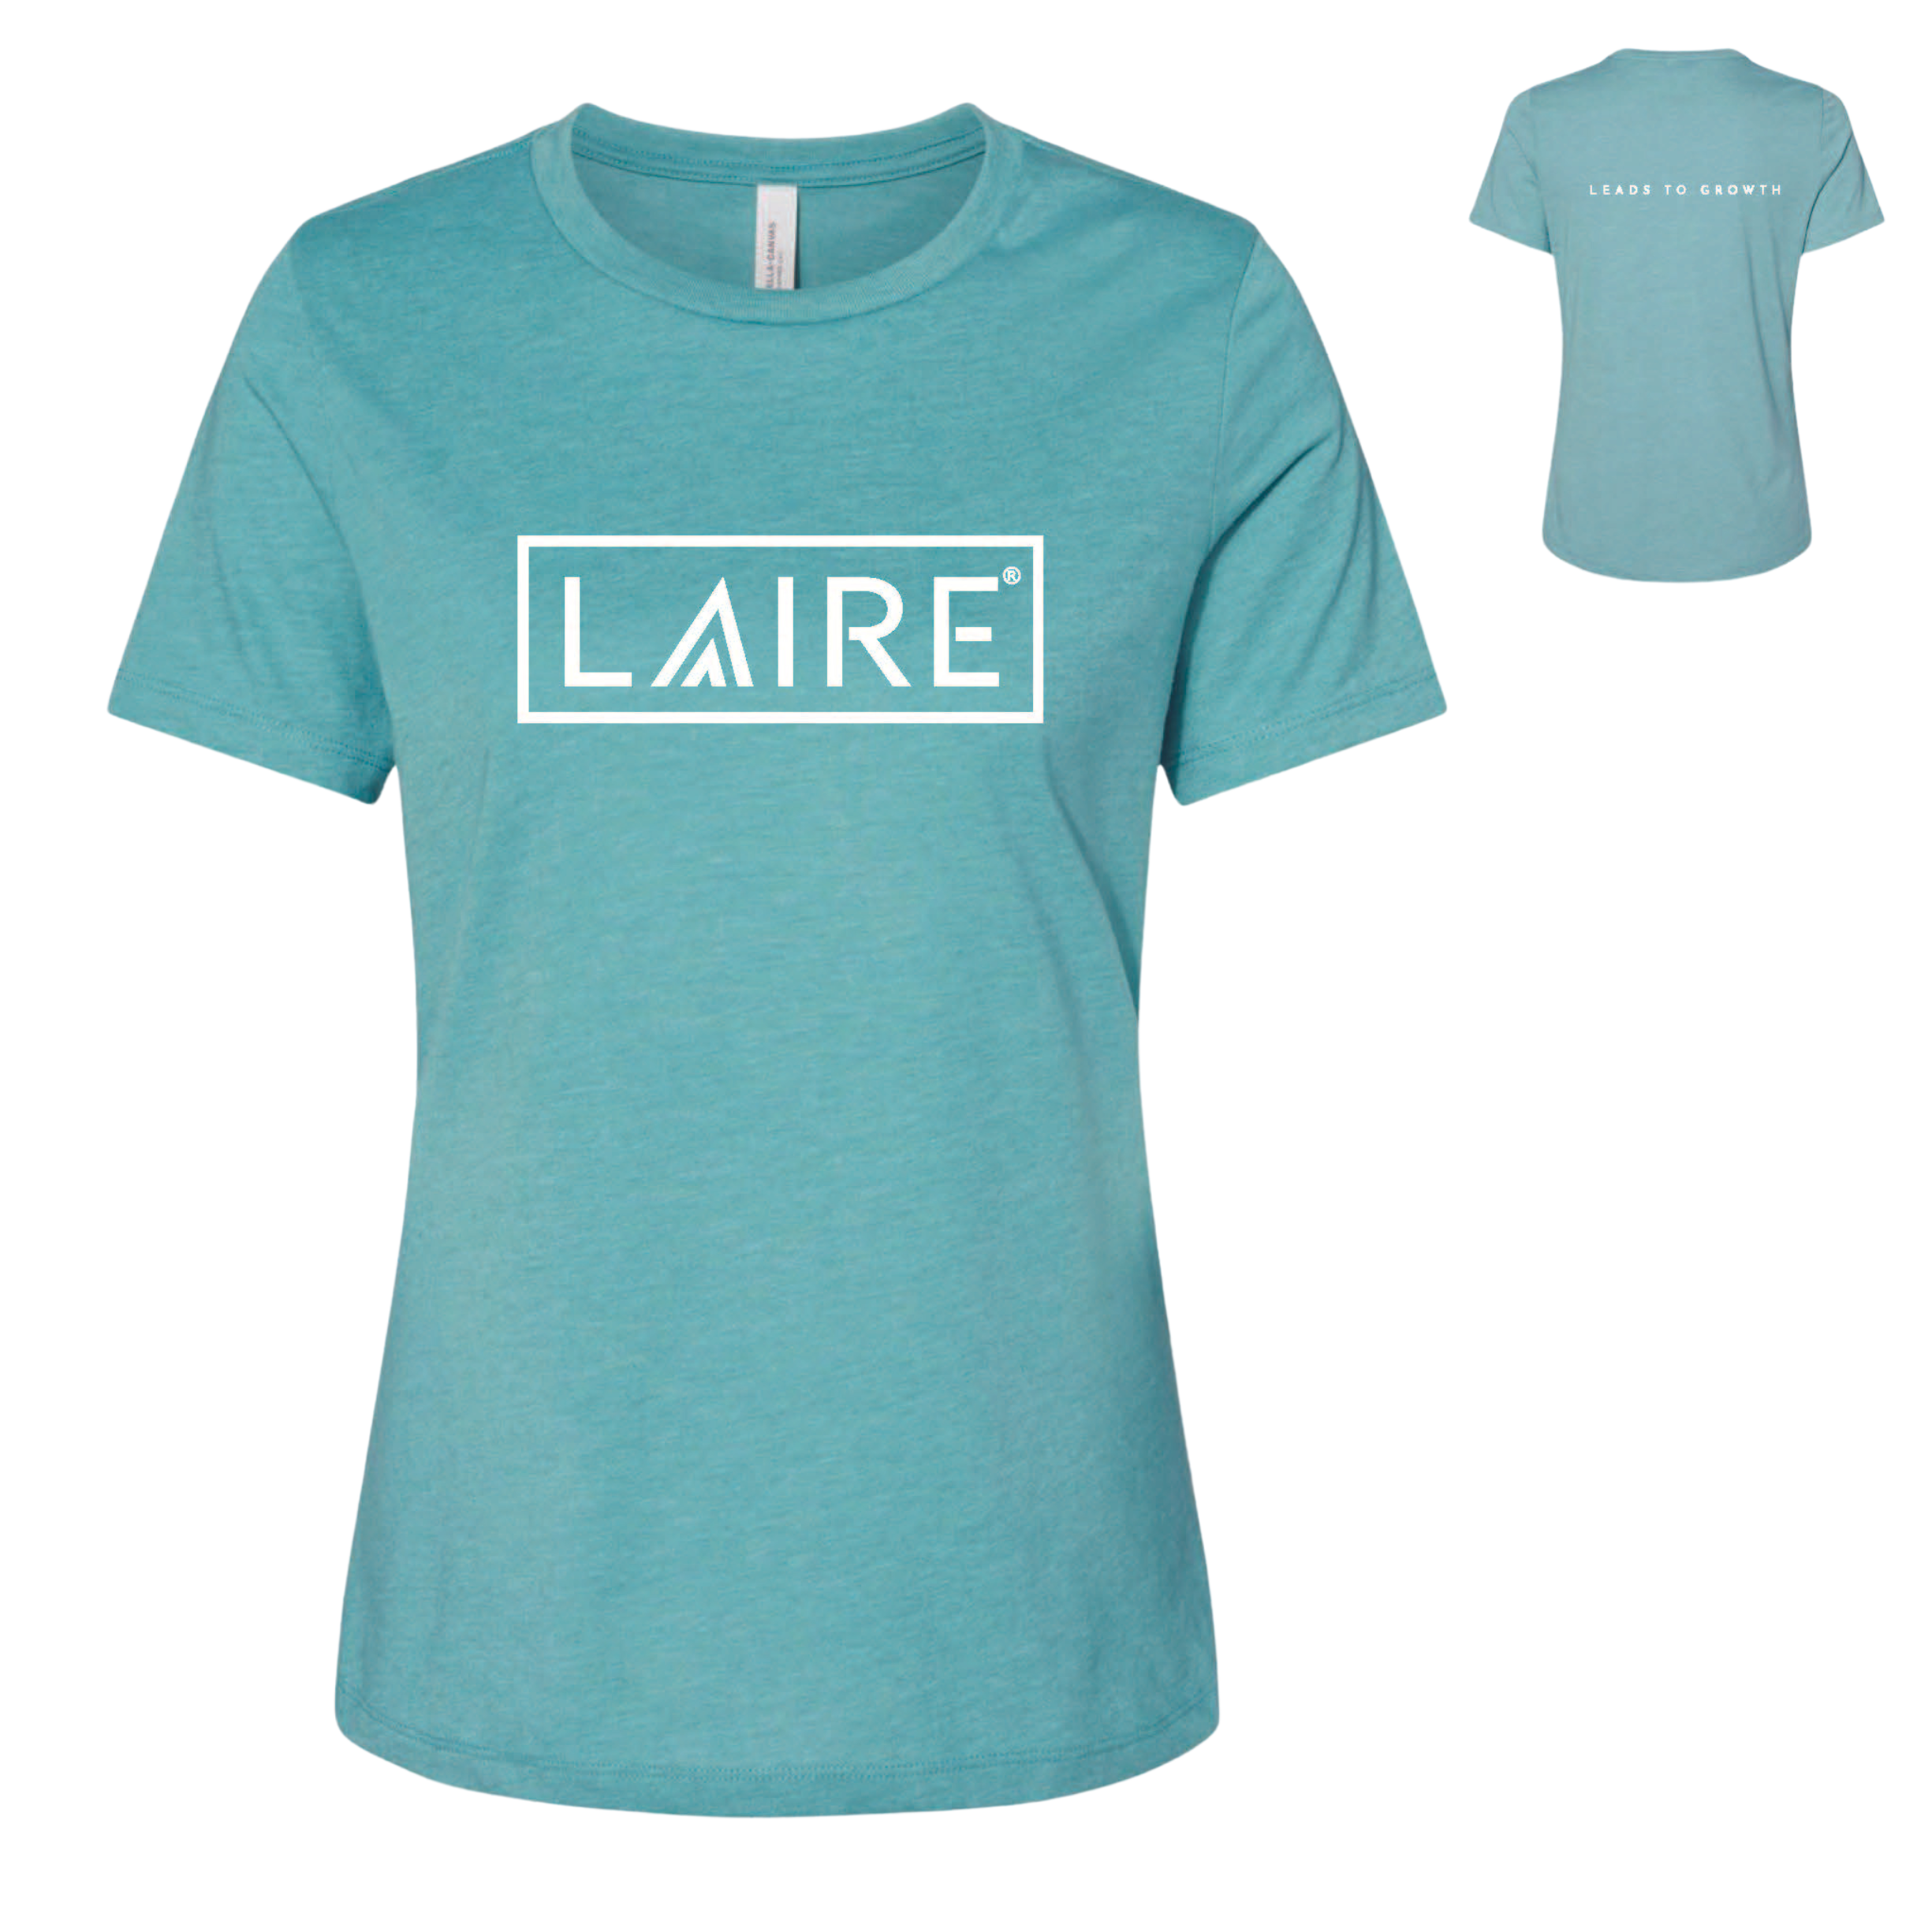 Super Soft Tri-Blend Women's Cut T-Shirt - Heather Blue Lagoon